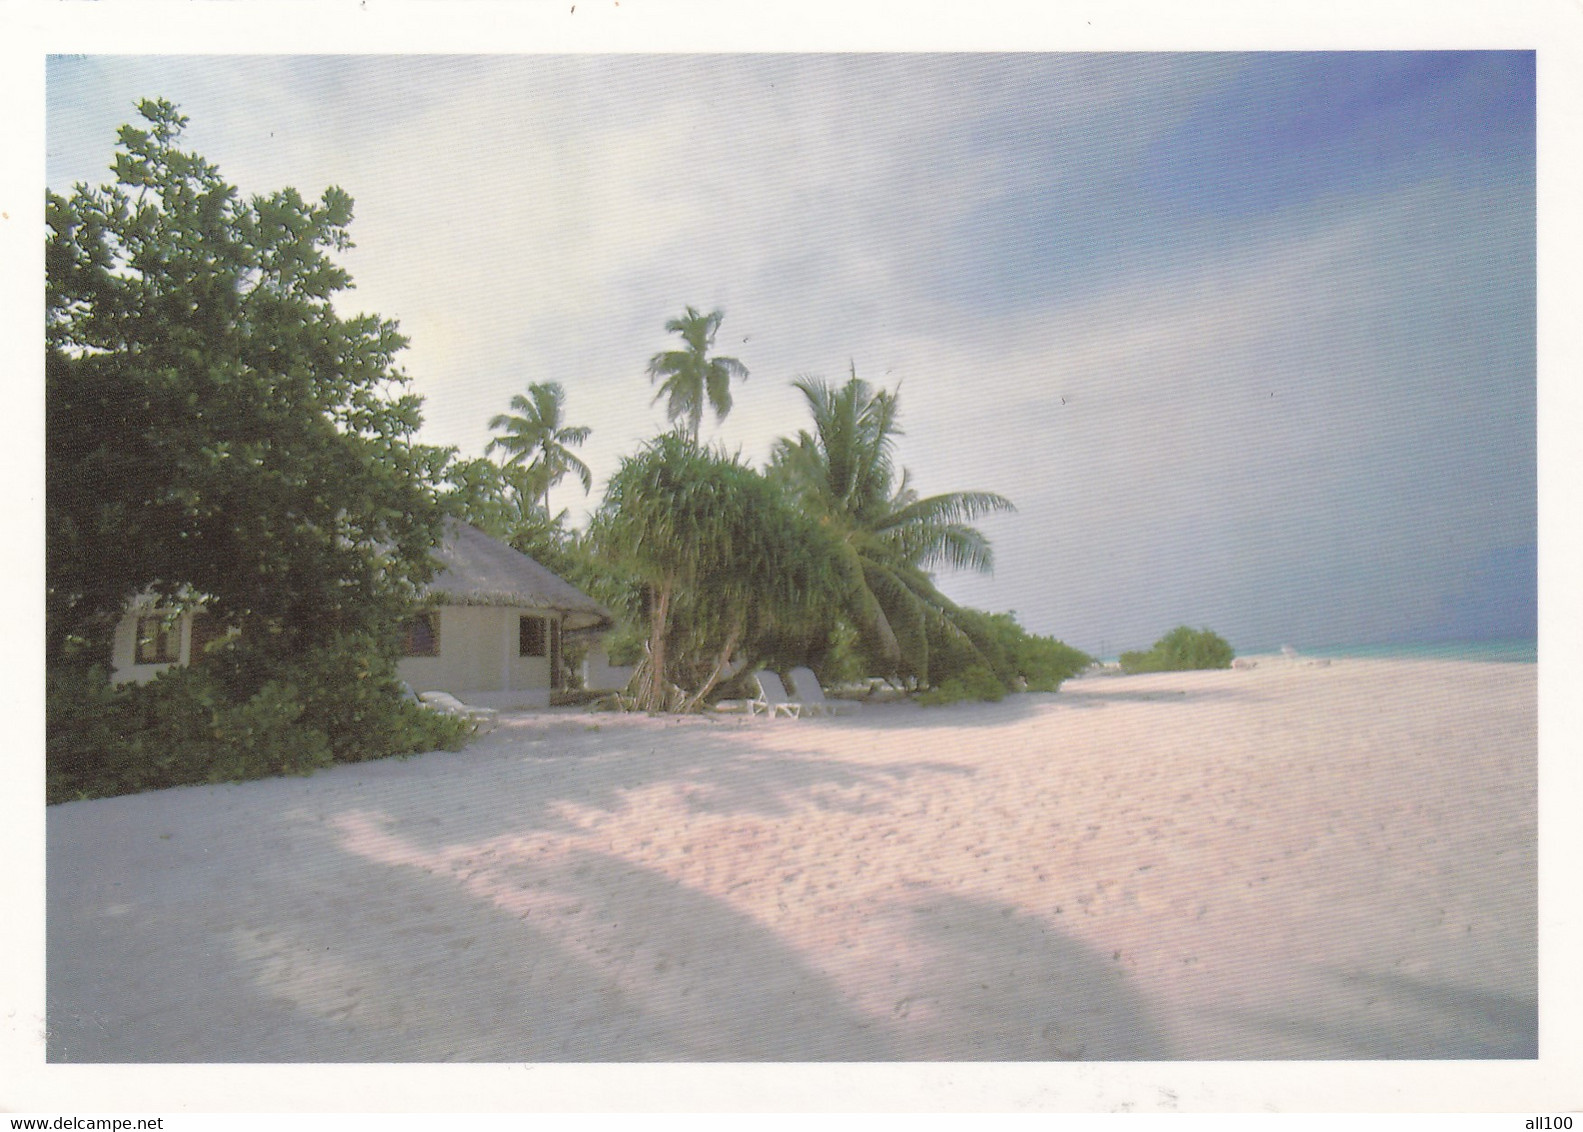 A20579 - MALDIVES VELAVARU ISLAND POST CARD USED STAMP MALDIVES ROSA MULTIFLORA SENT TO SWITZERLAND BEACH PALM TREES - Maldive